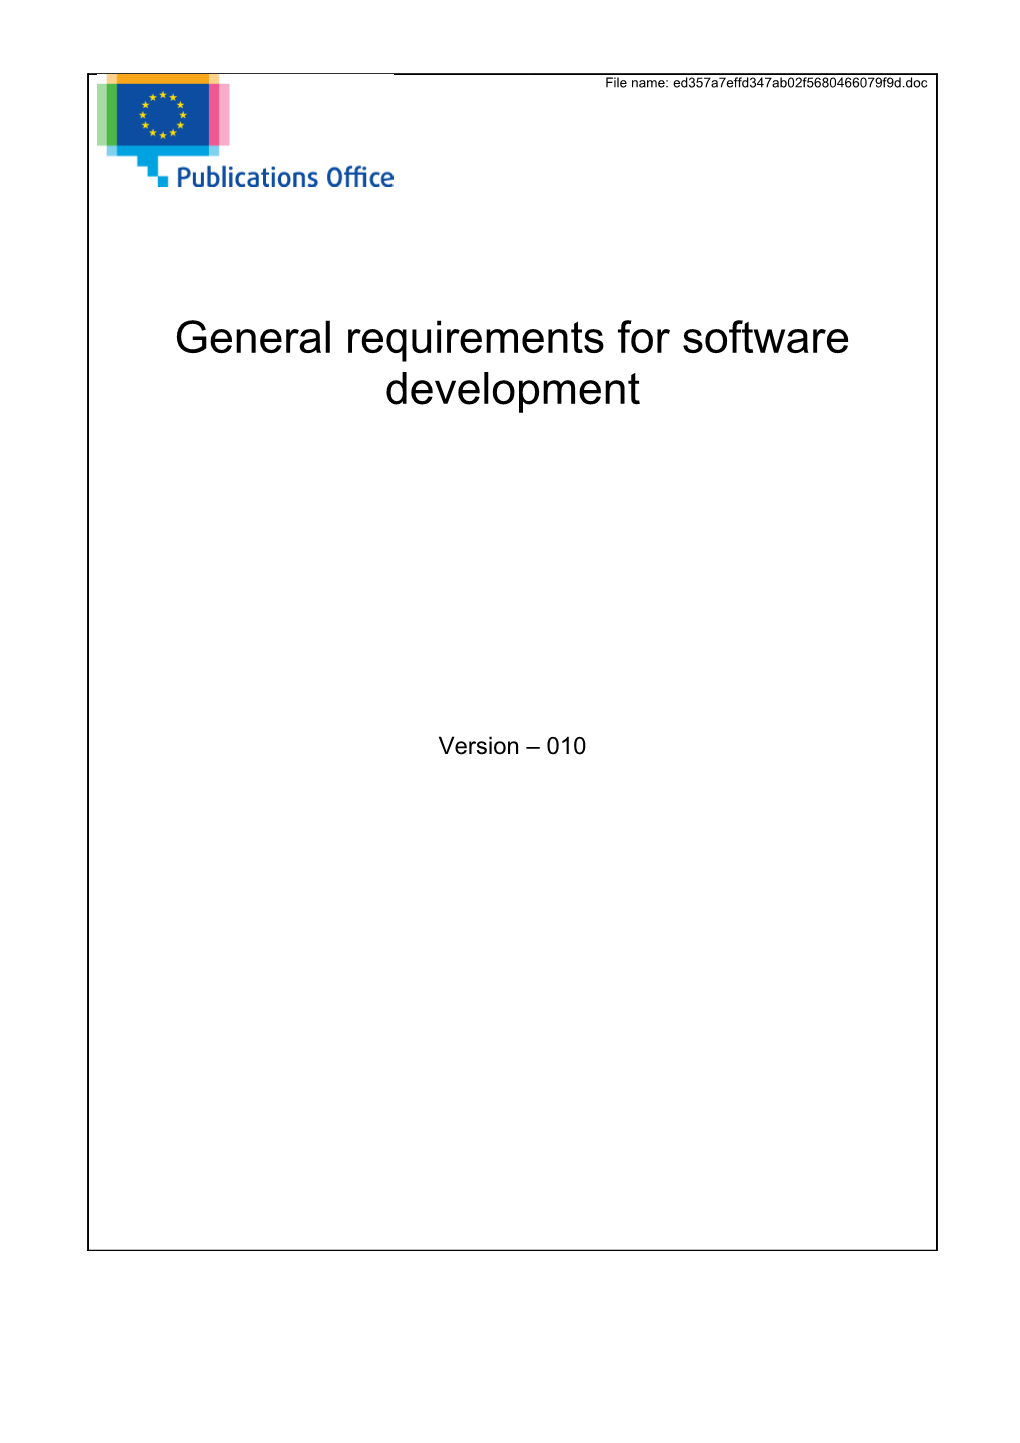 Software Development Guidelines